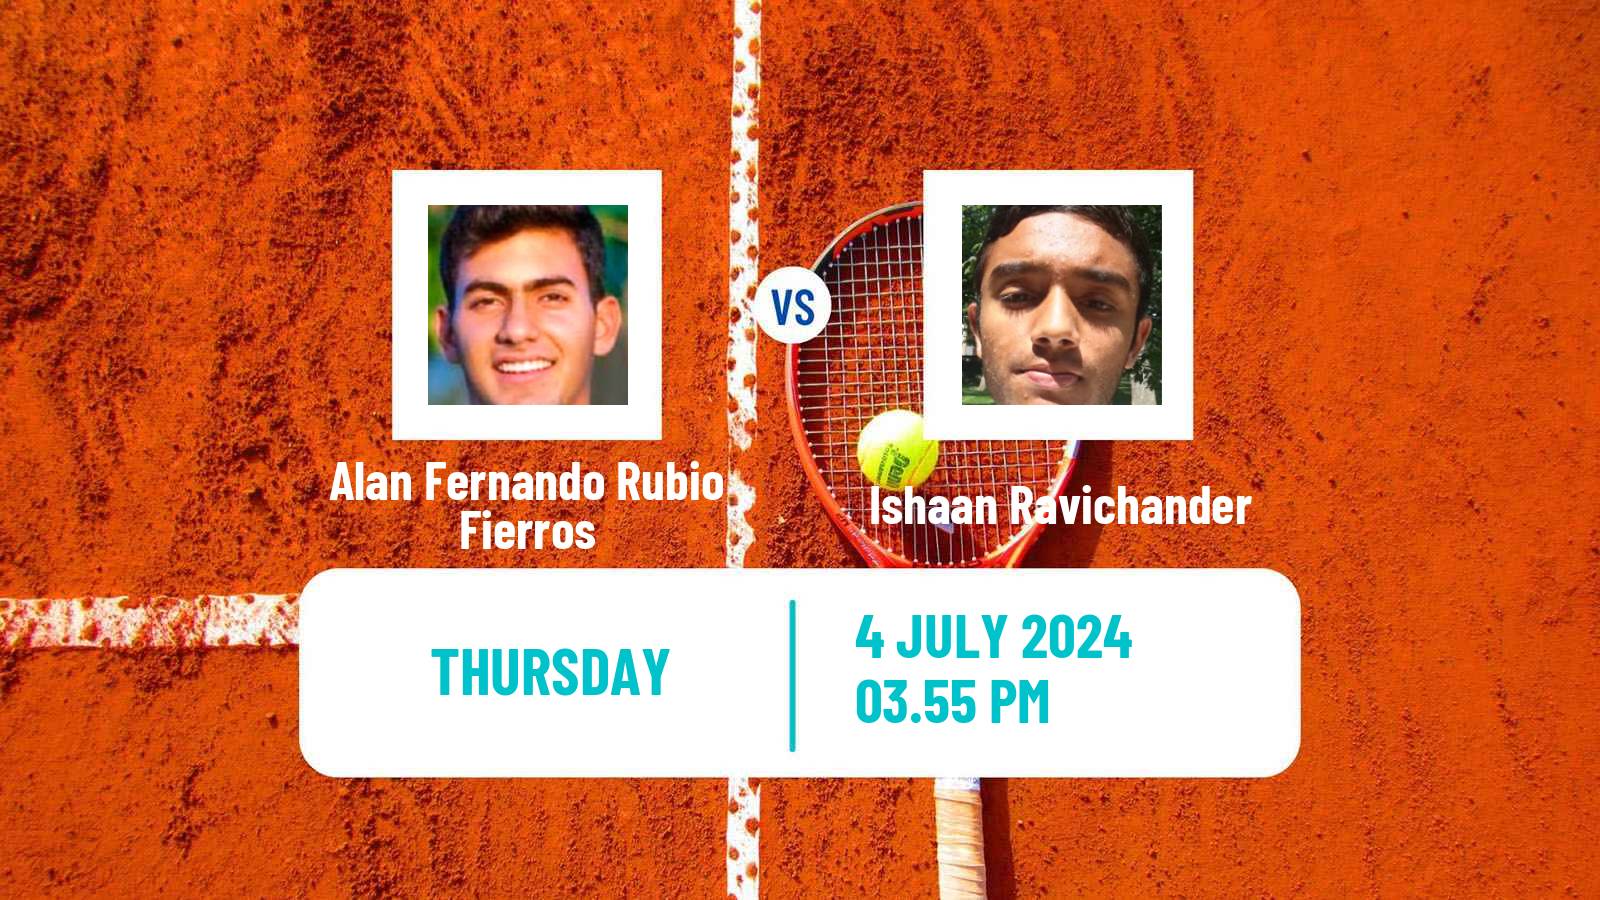 Tennis ITF M15 Lakewood Ca Men Alan Fernando Rubio Fierros - Ishaan Ravichander